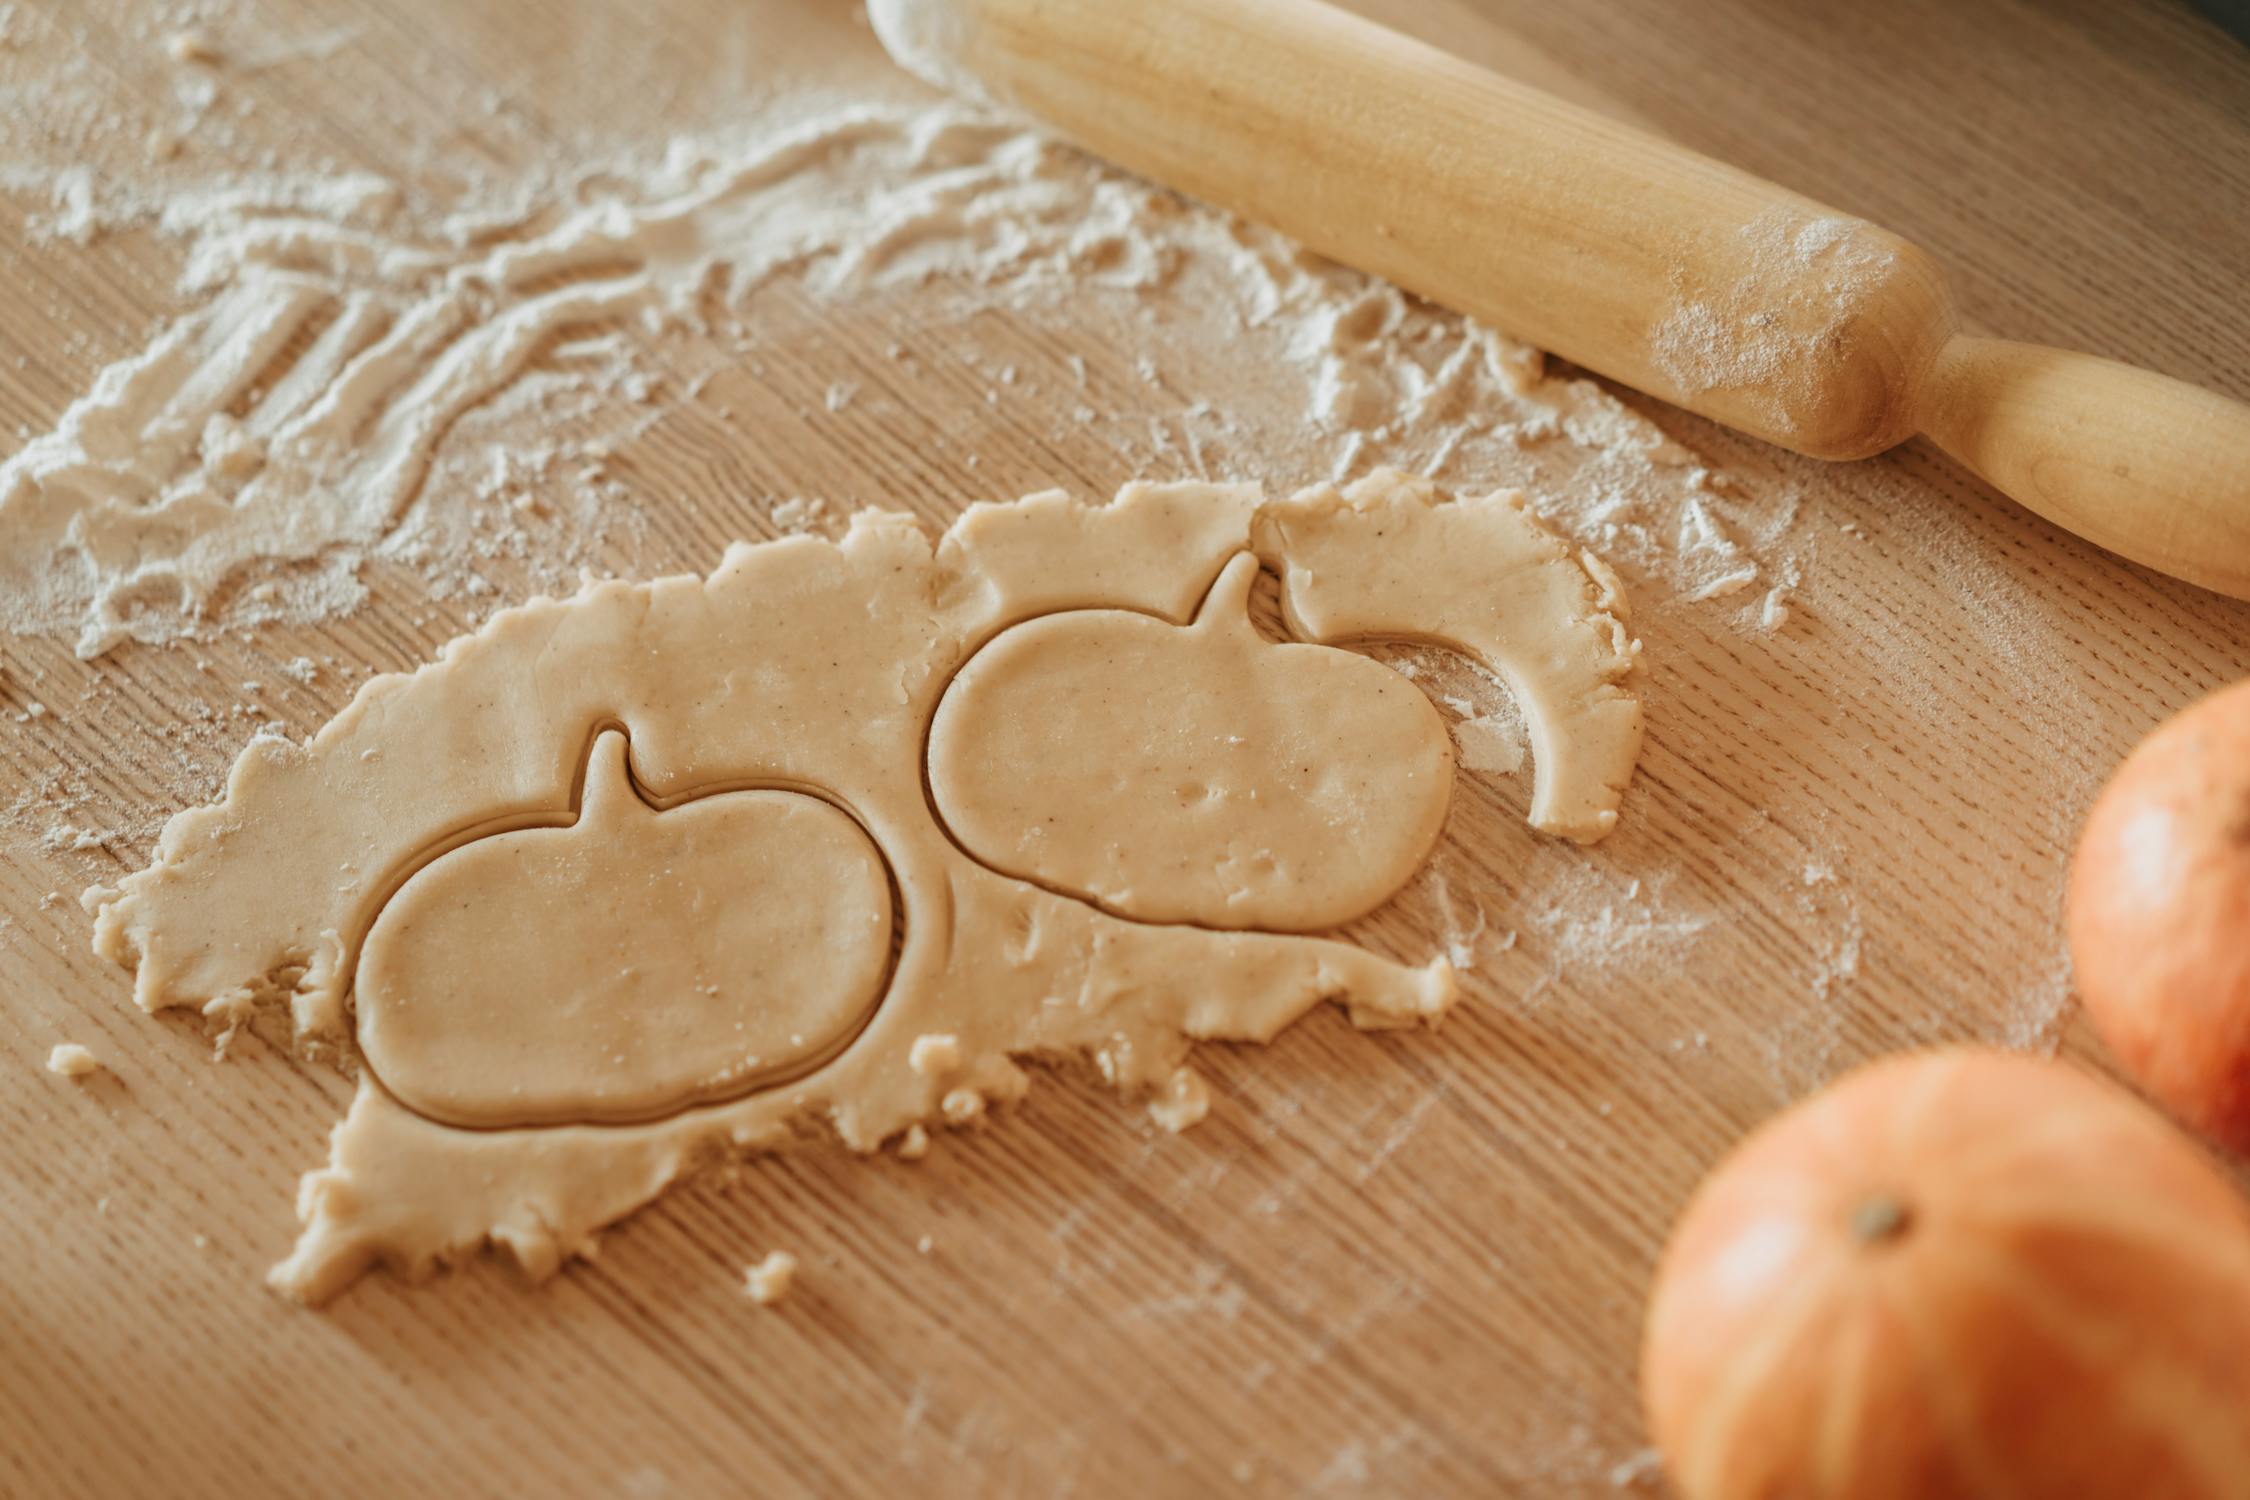 Pumpkin Photo by olia danilevich from Pexels: https://www.pexels.com/photo/making-pumpkin-shaped-cookies-5471933/